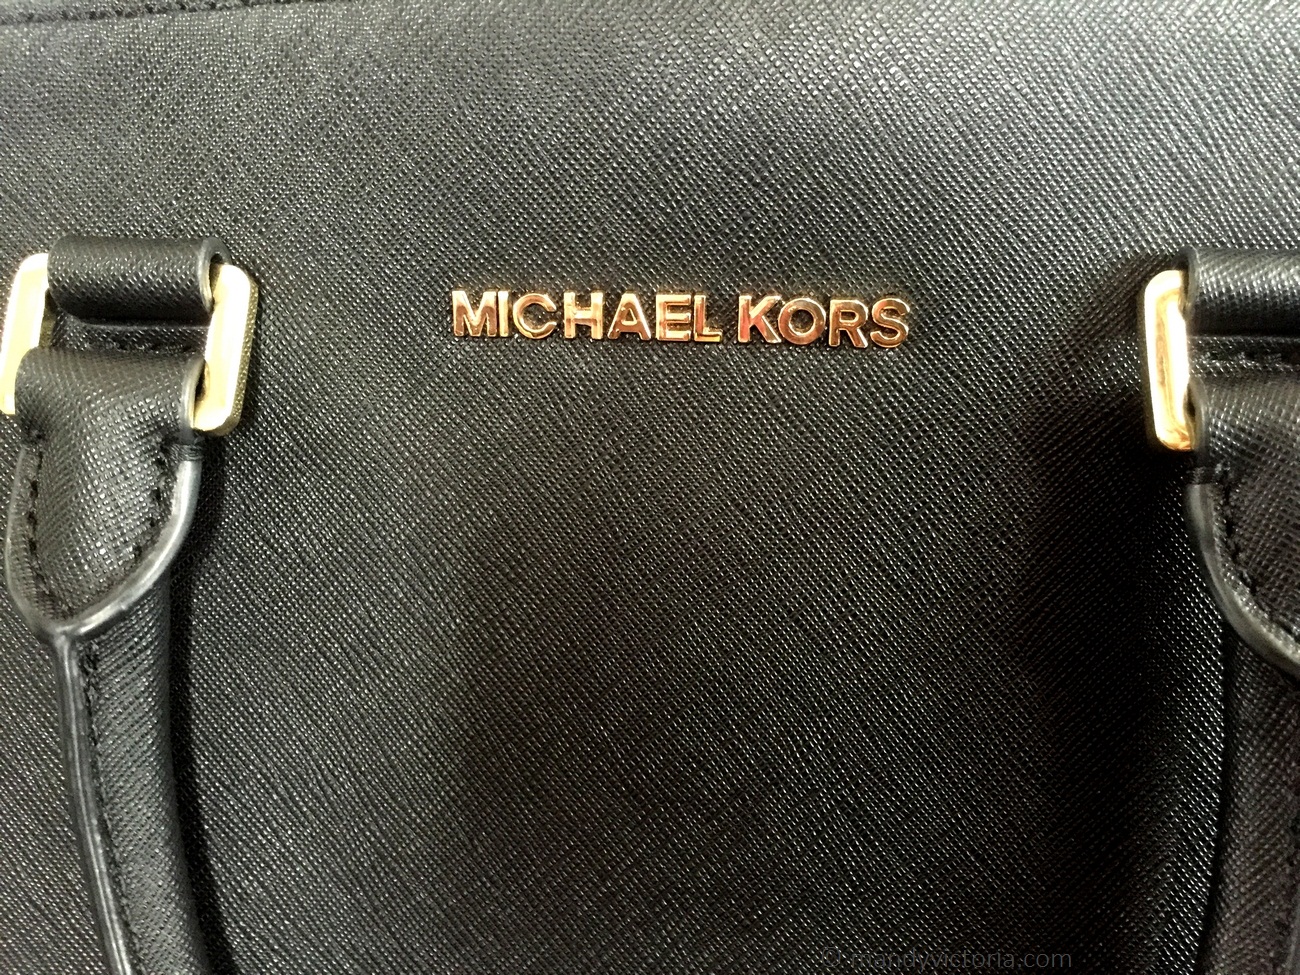 Michael Kors Front